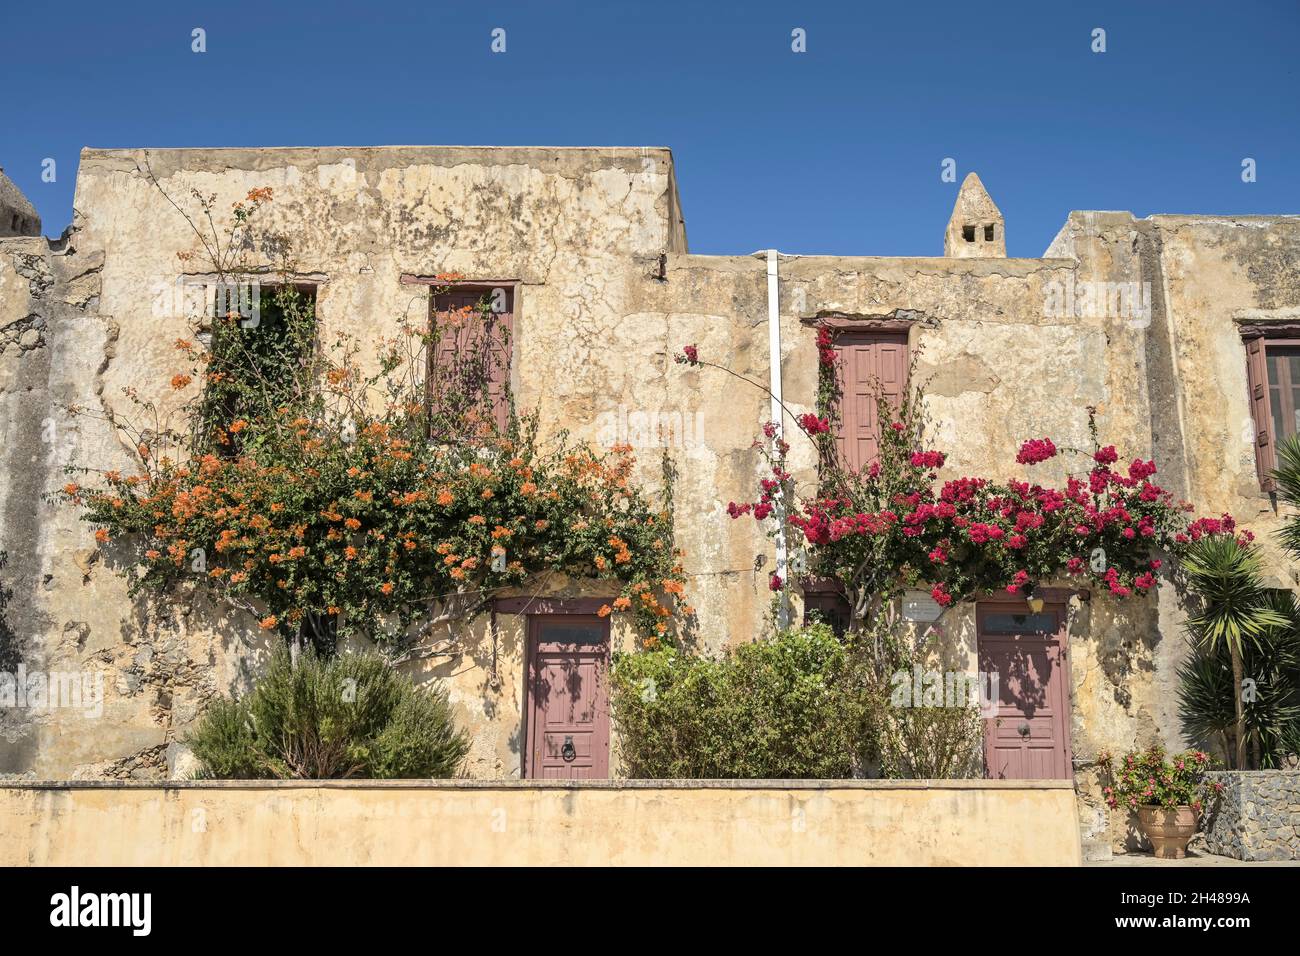 Klosterzellen, Mönchszimmer, Kloster Preveli, Kreta, Griechenland Banque D'Images